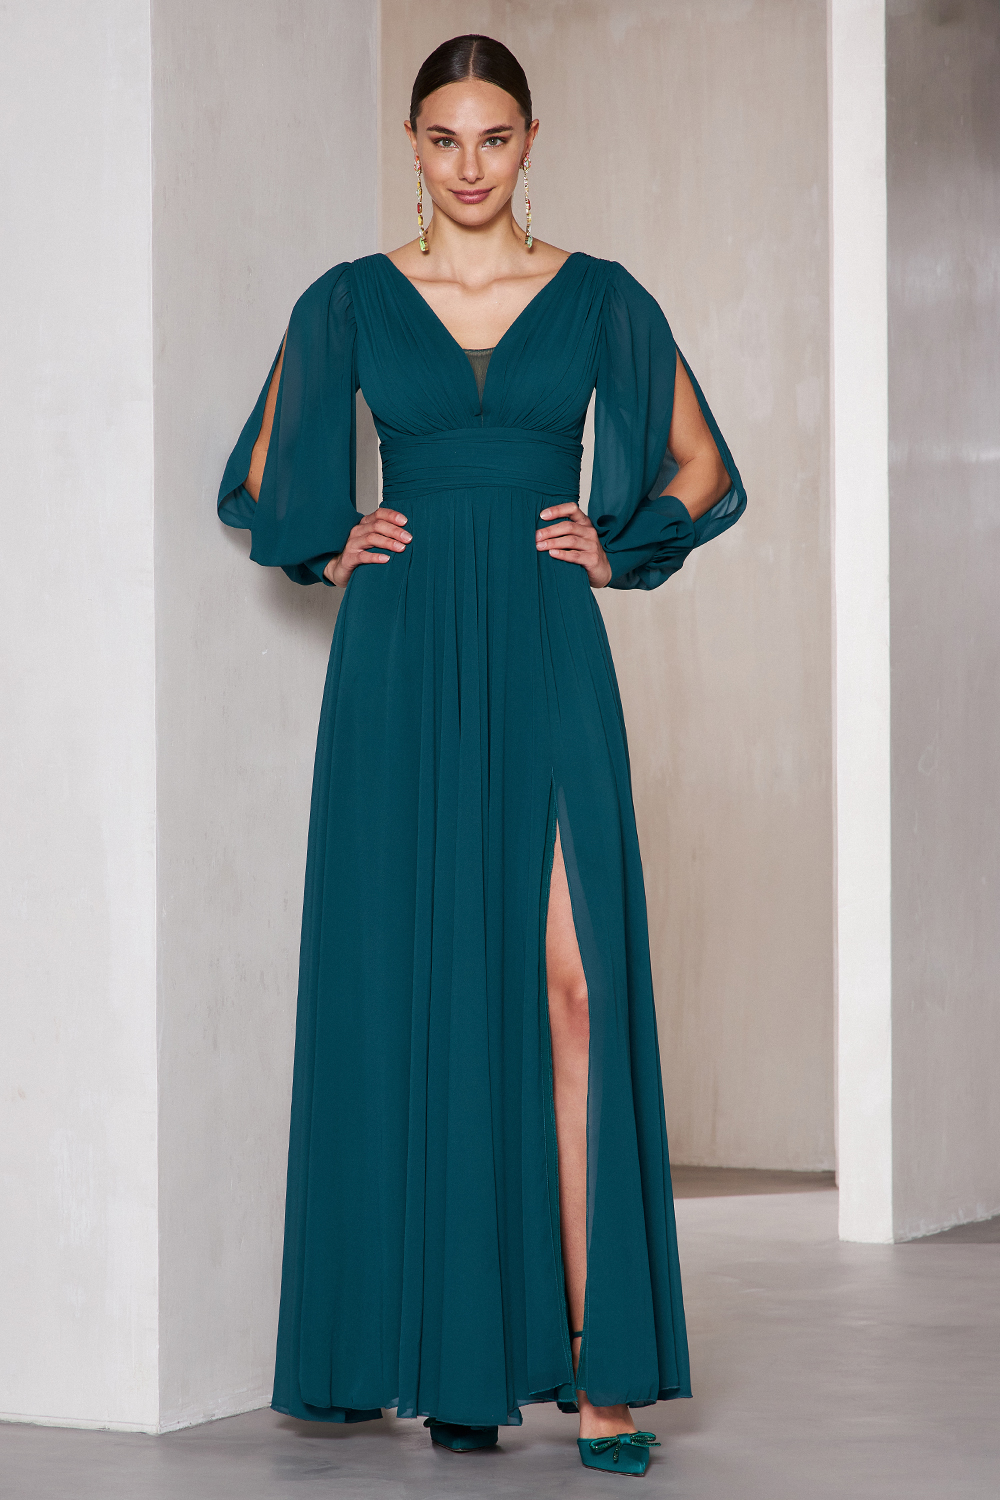 Классические платья / Long cocktail dress with chiffon fabric, long sleeves and opening